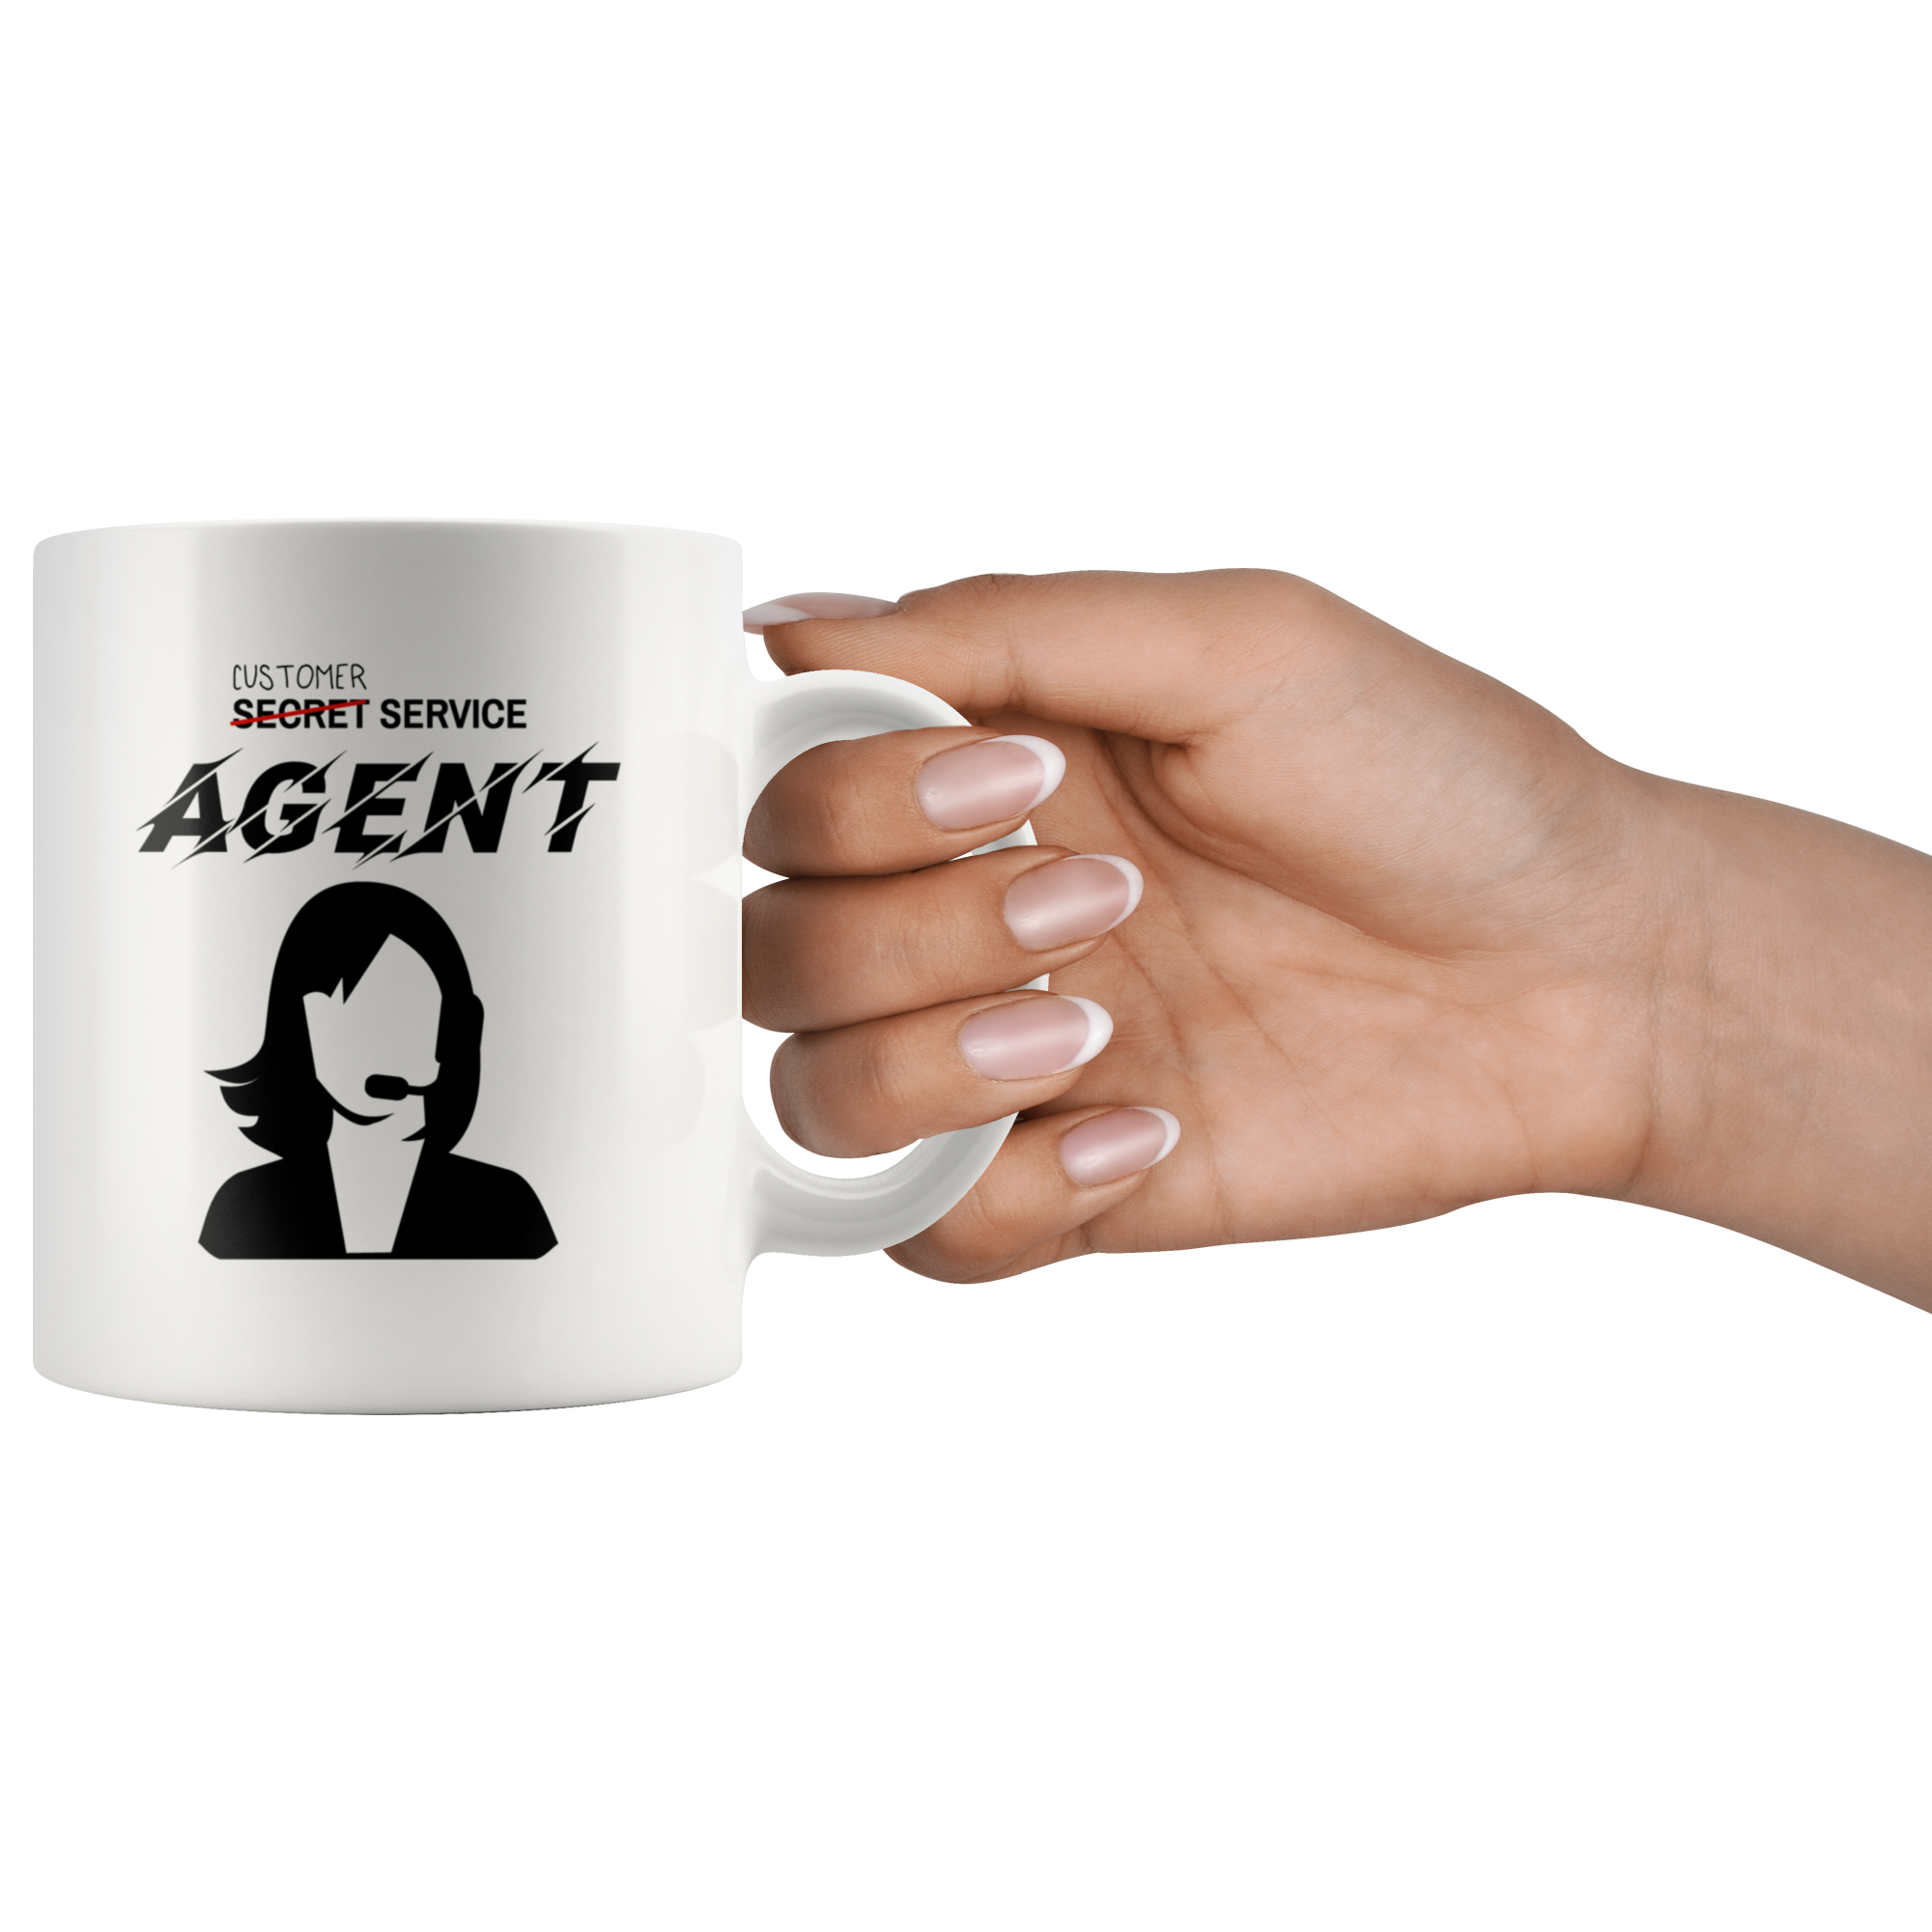 Customer Service Agent White Mug - 11 oz